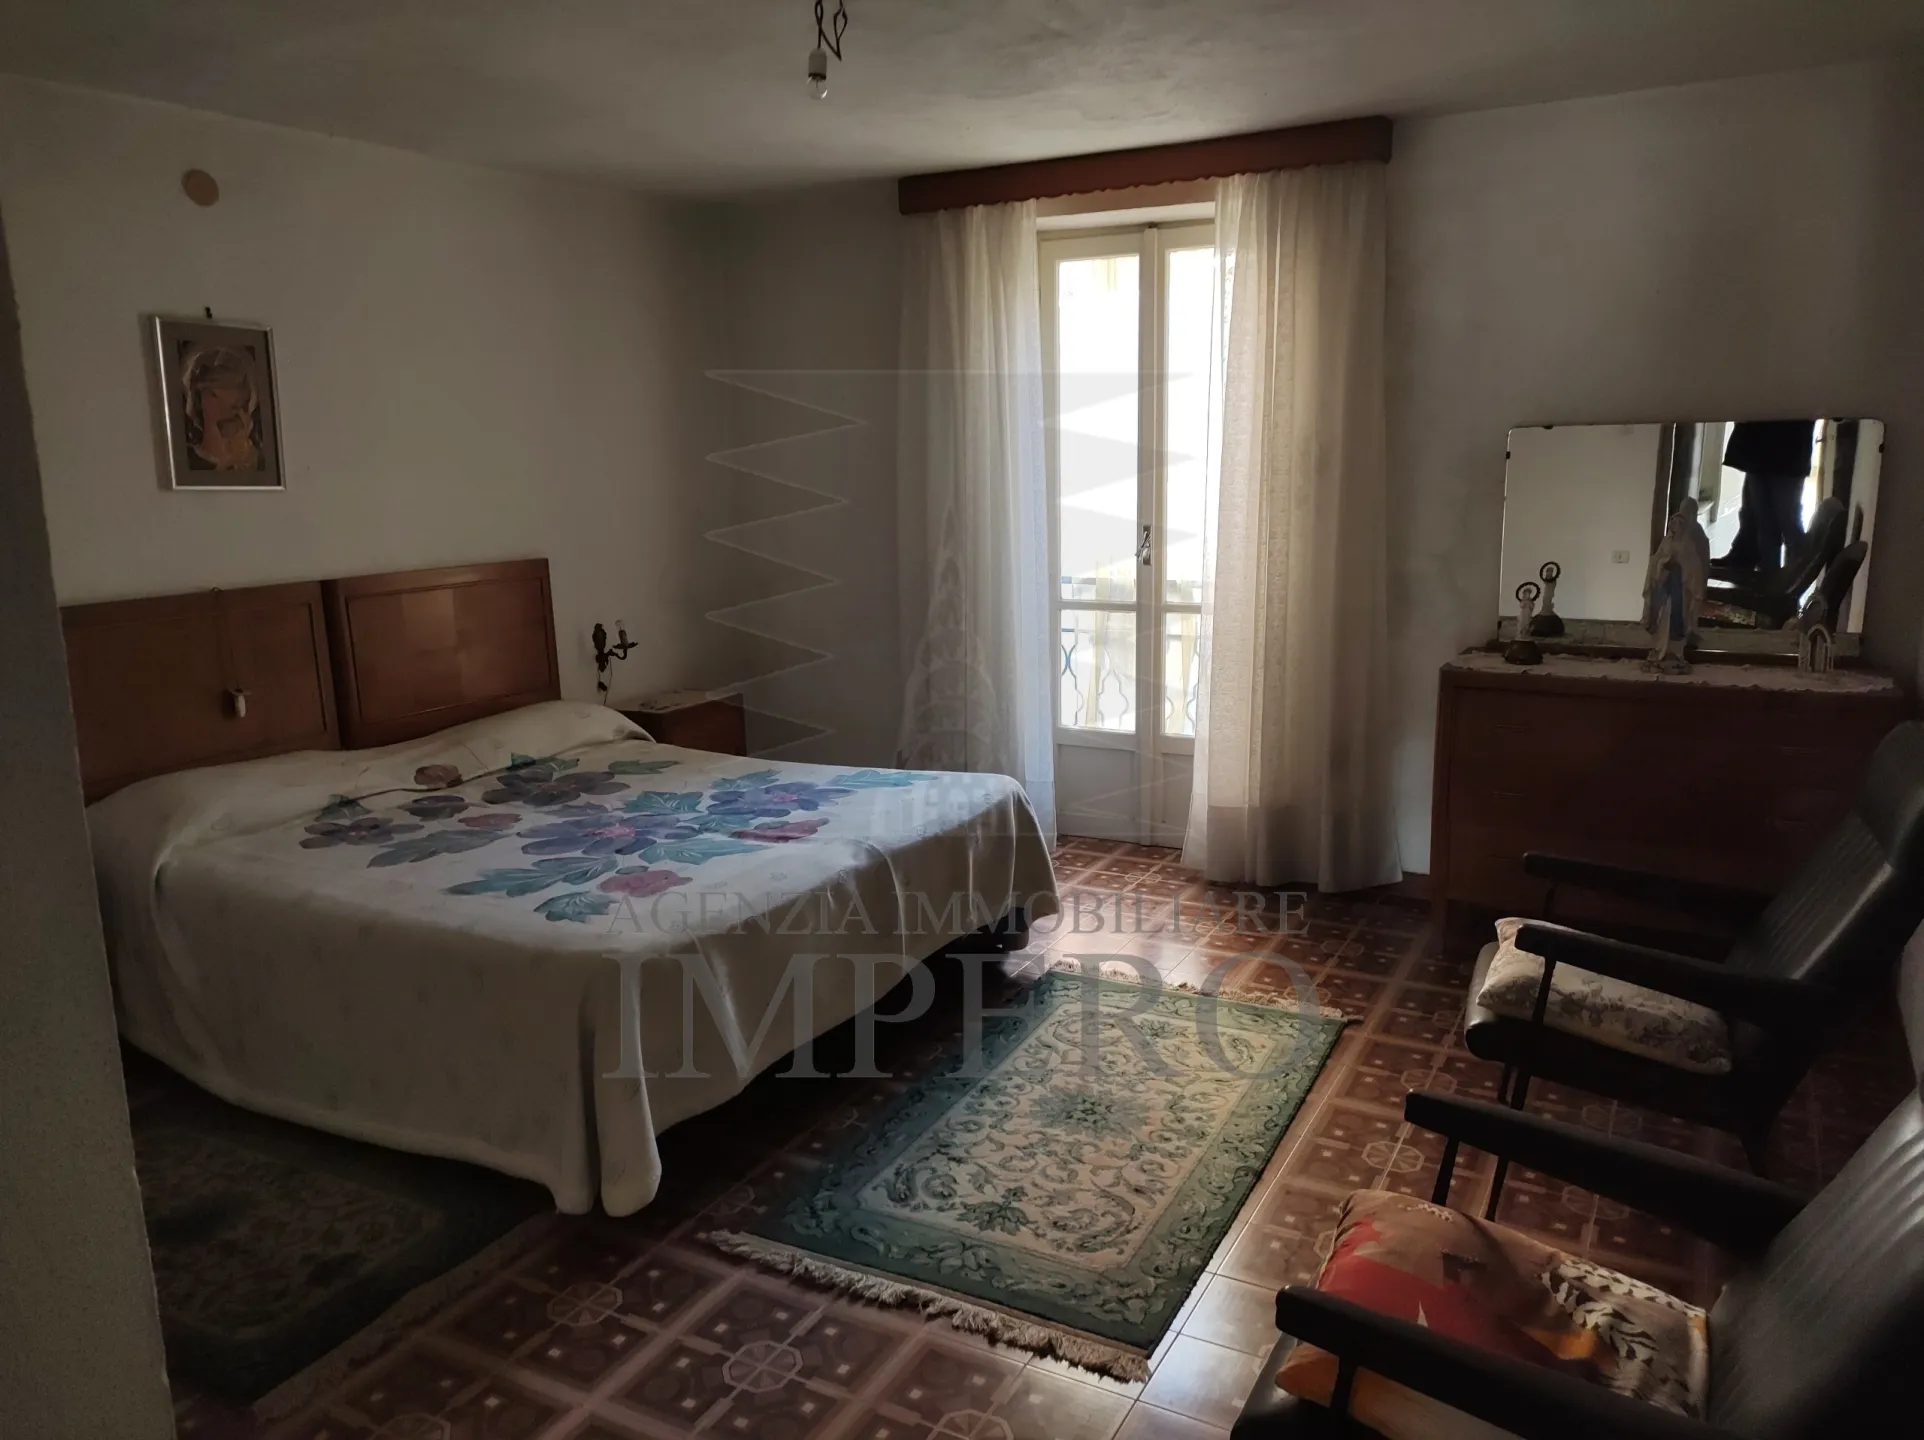 Immagine per Appartamento in vendita a Pigna via Carriera Piana